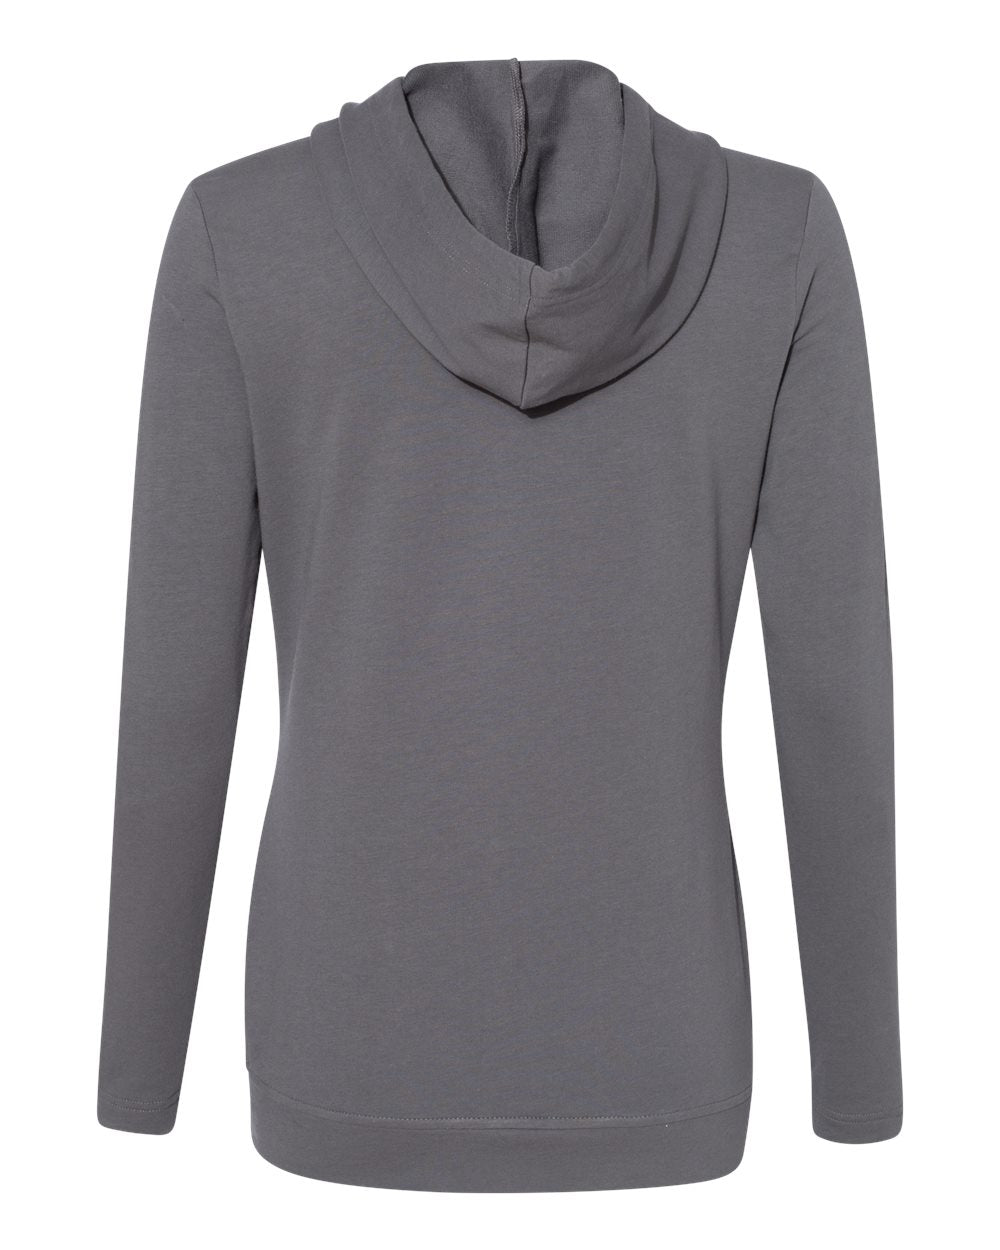 Adidas A451 Women's Lightweight Hooded Sweatshirt #color_Grey Five